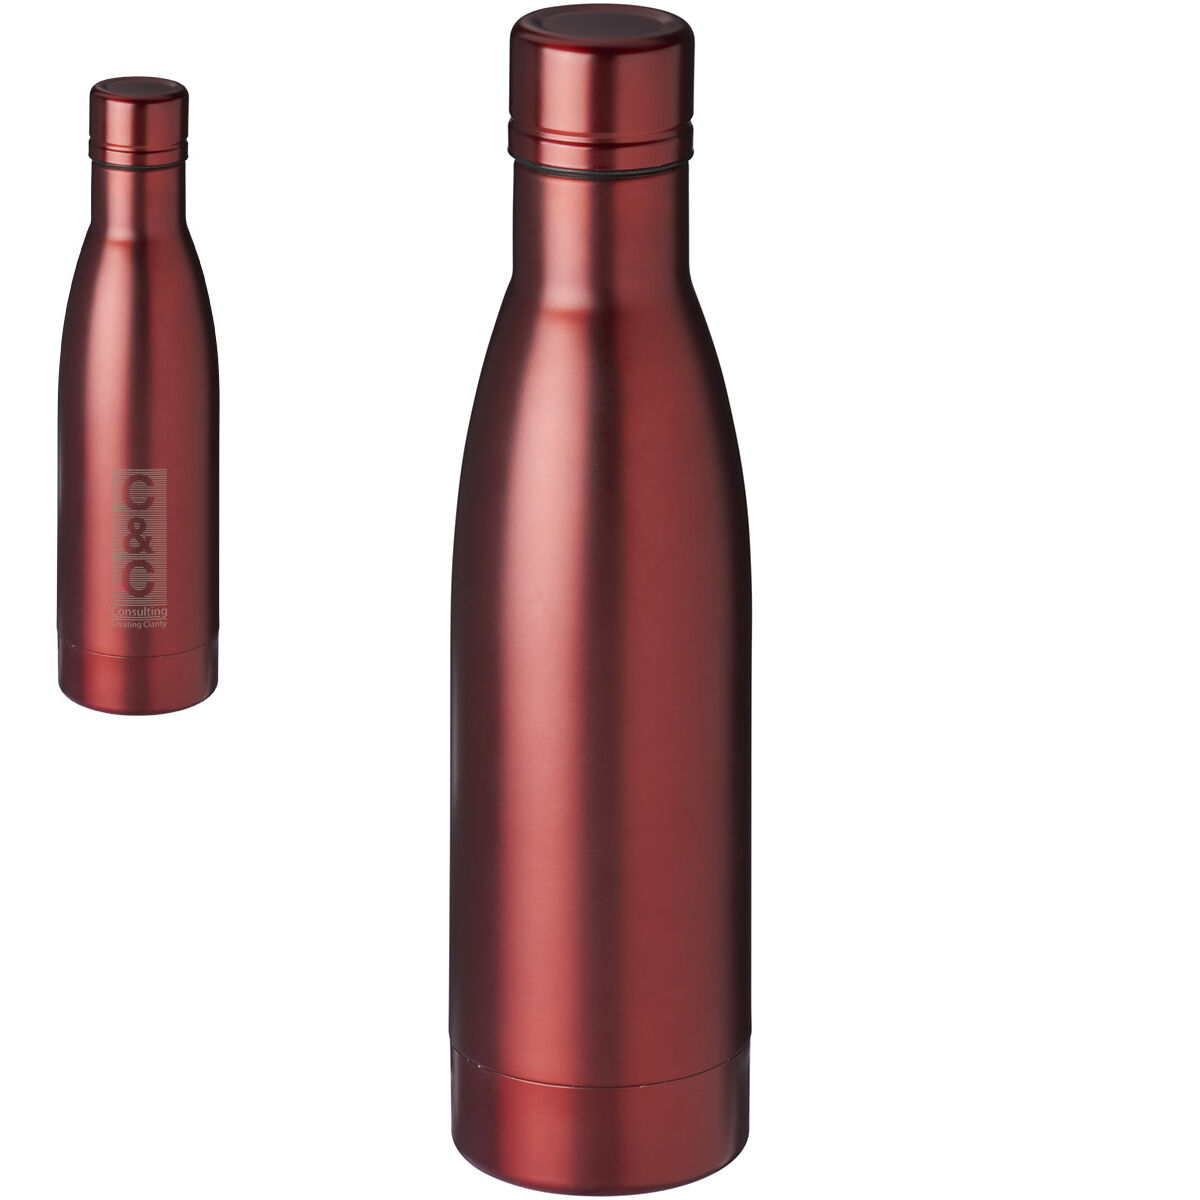 Steel Vacuum Bottle copper lined Red